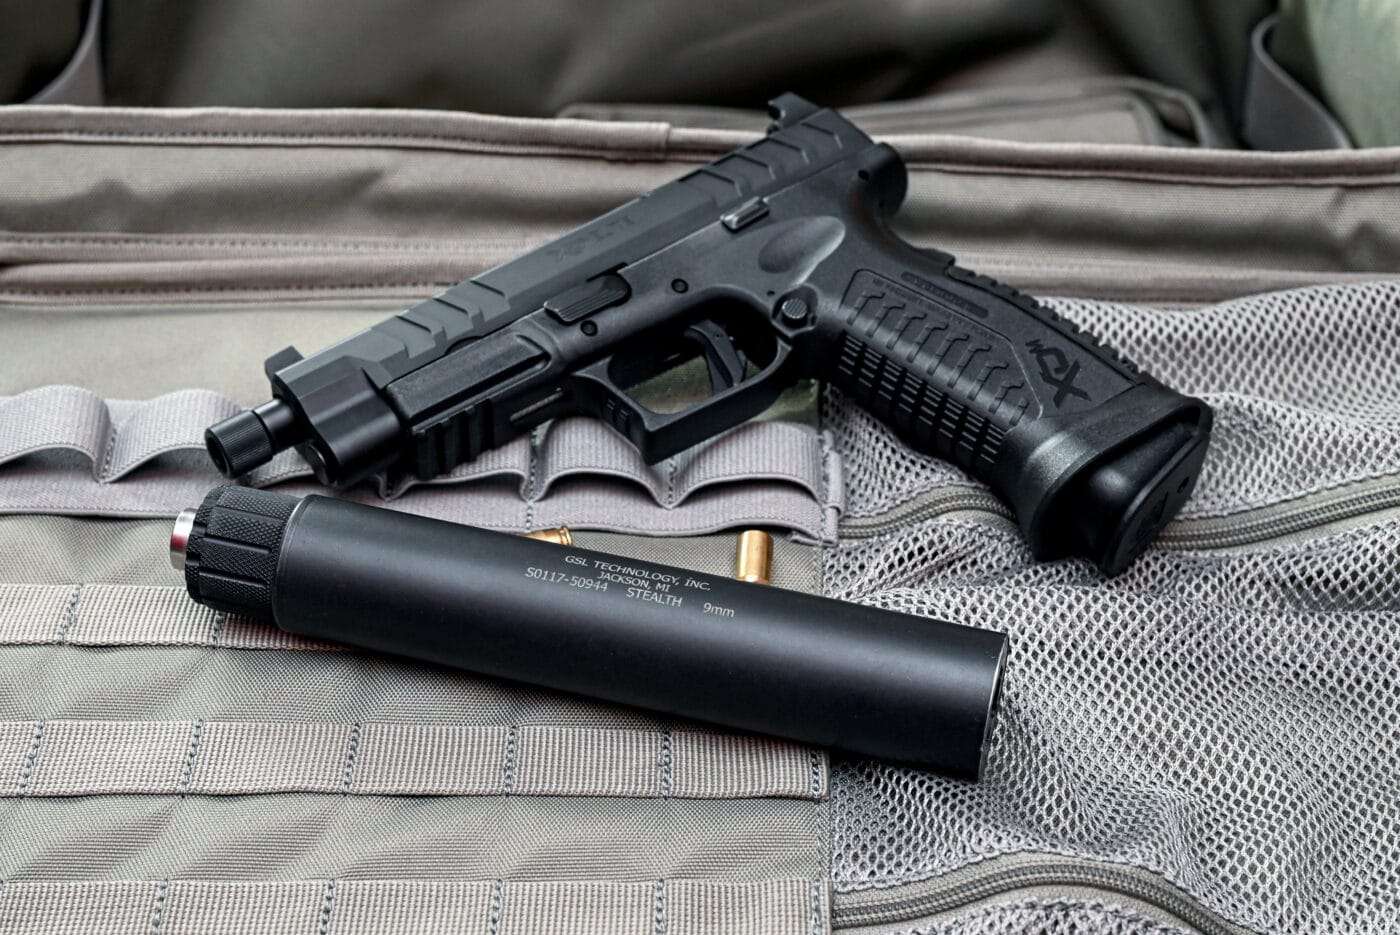 GSL noise suppressor next to Springfield XD-M Elite pistol